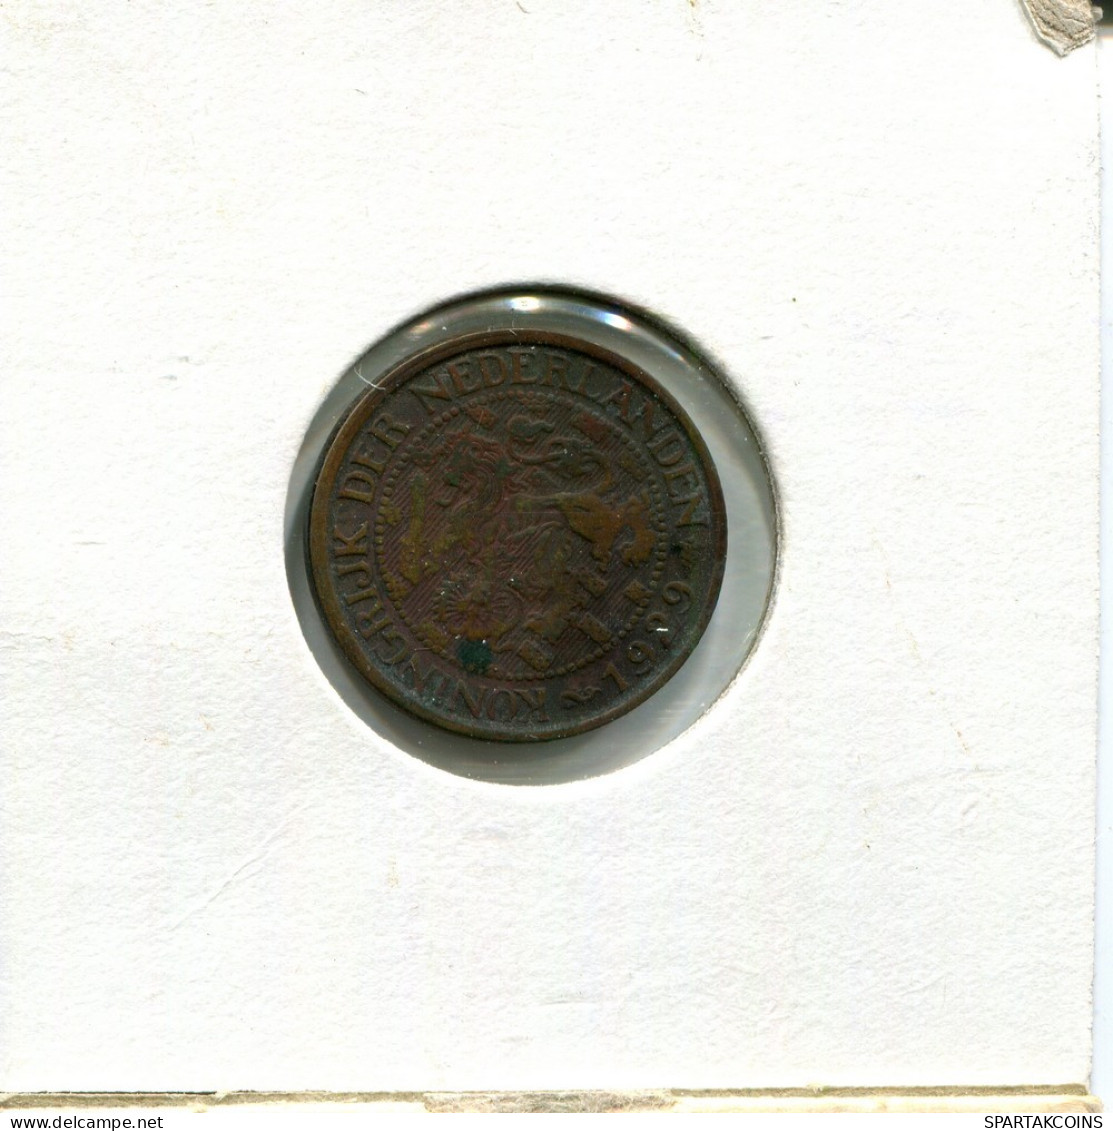 1 CENT 1929 NEERLANDÉS NETHERLANDS Moneda #AU247.E.A - 1 Centavos